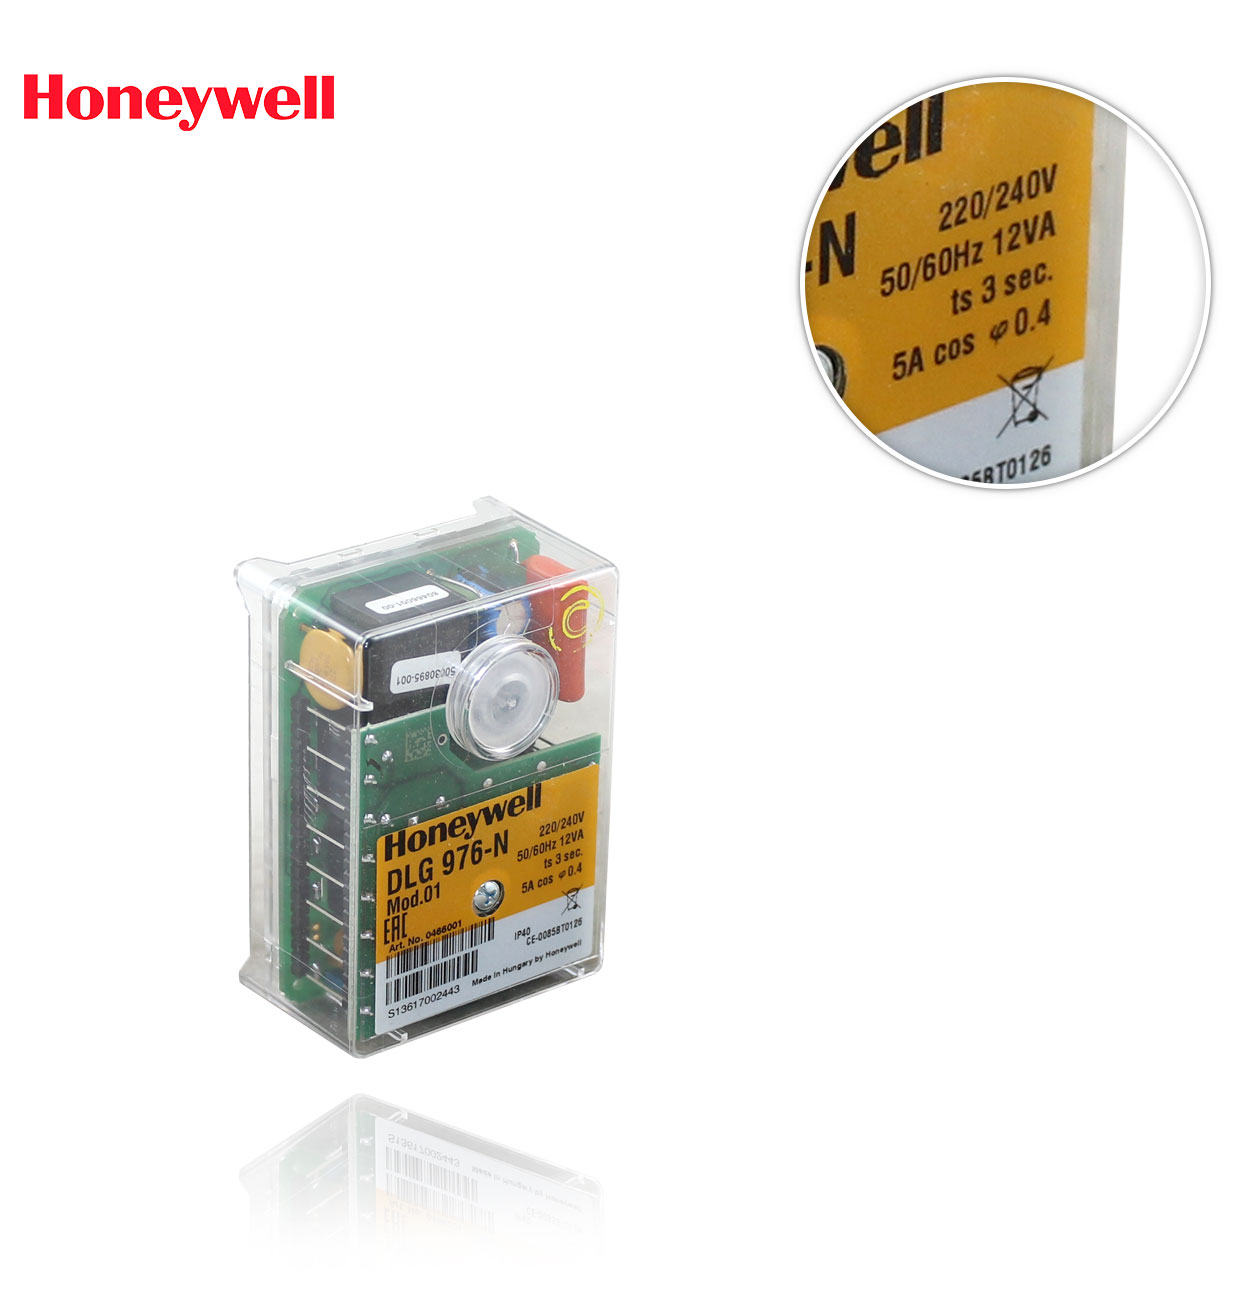 DLG 976-N  (Mod.01)  CONTROL BOX SATRONIC/ HONEYWELL